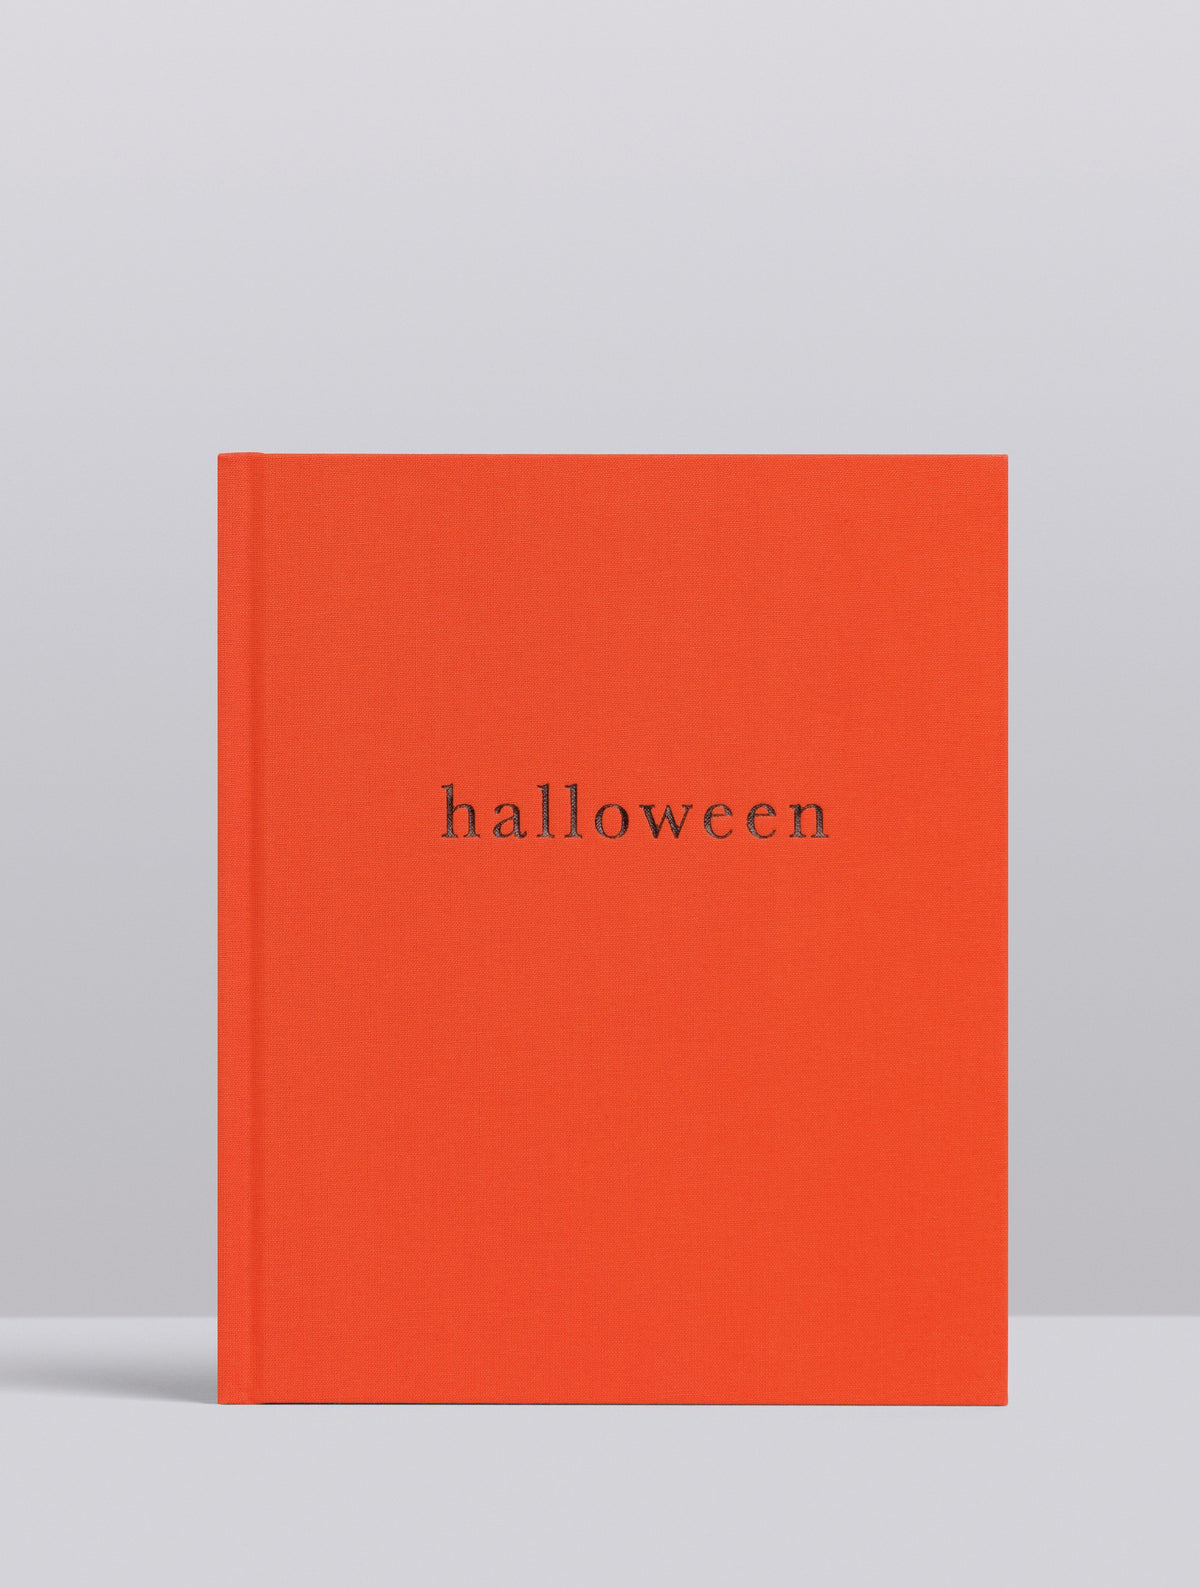 Halloween. Our Halloween Book